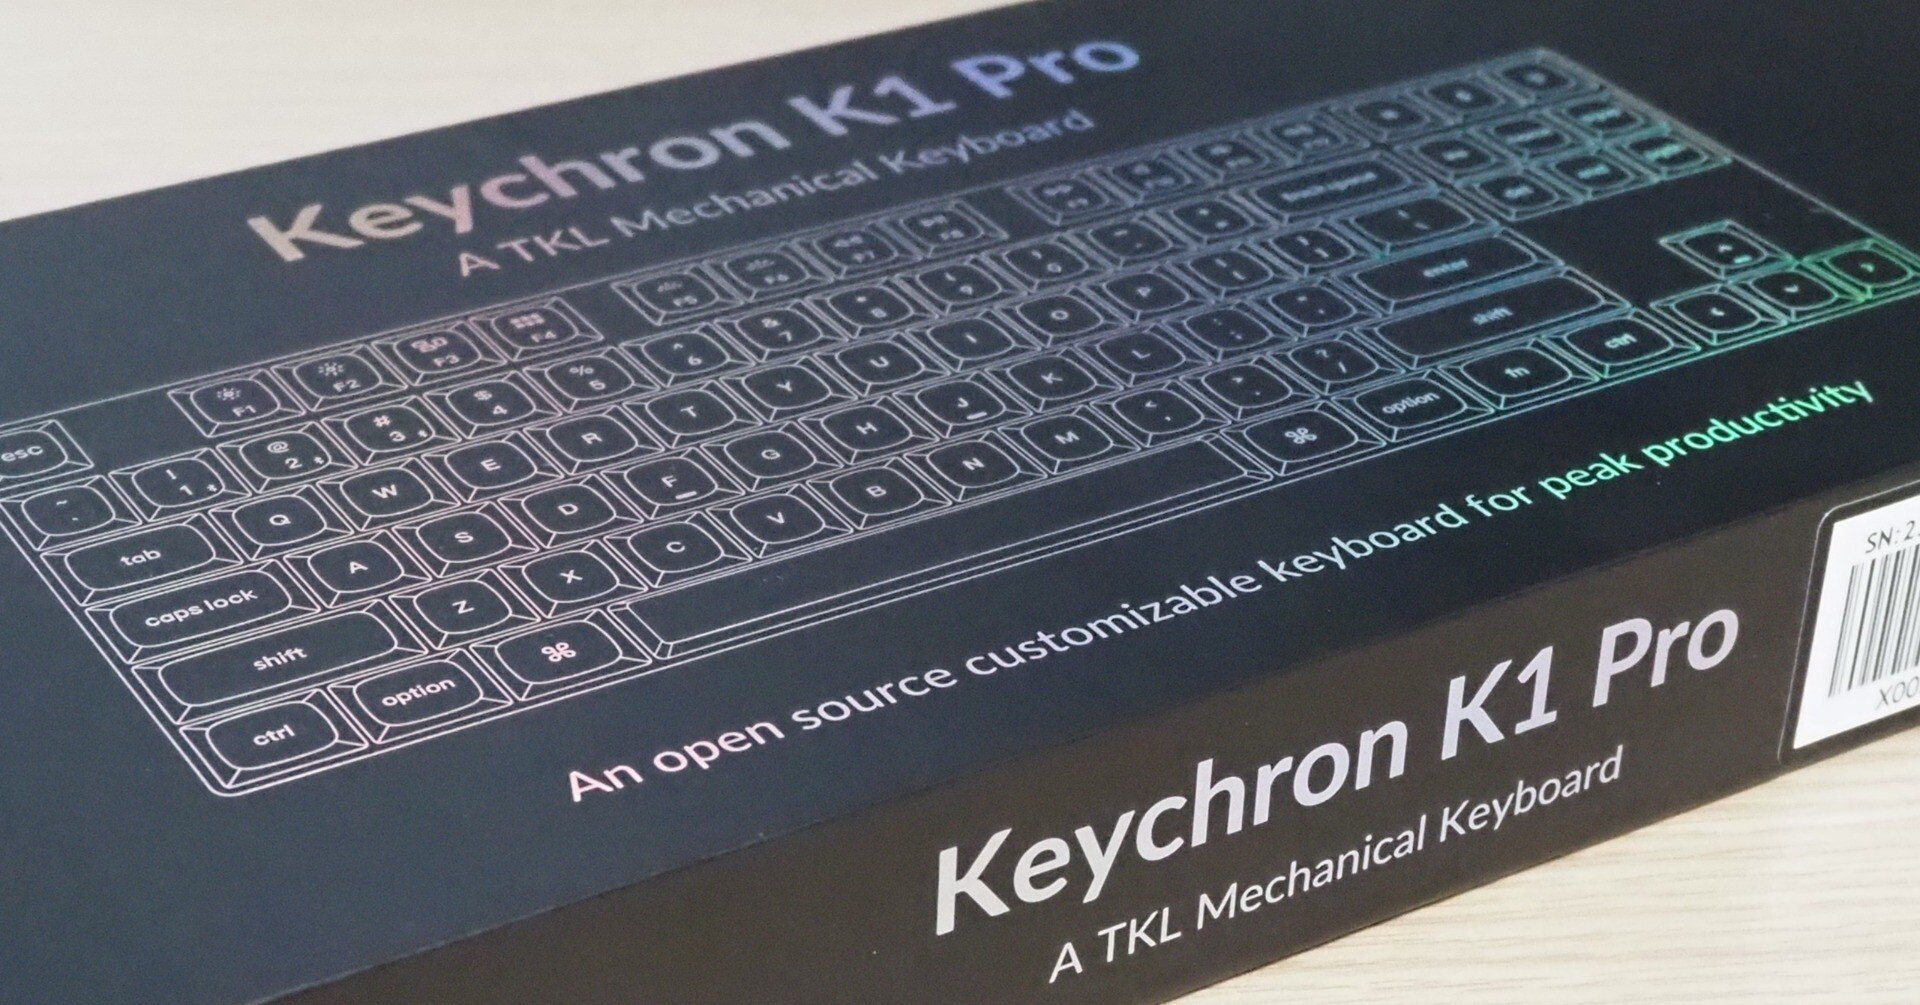 特注食品 Keychron K11 Pro 赤軸 | www.terrazaalmar.com.ar